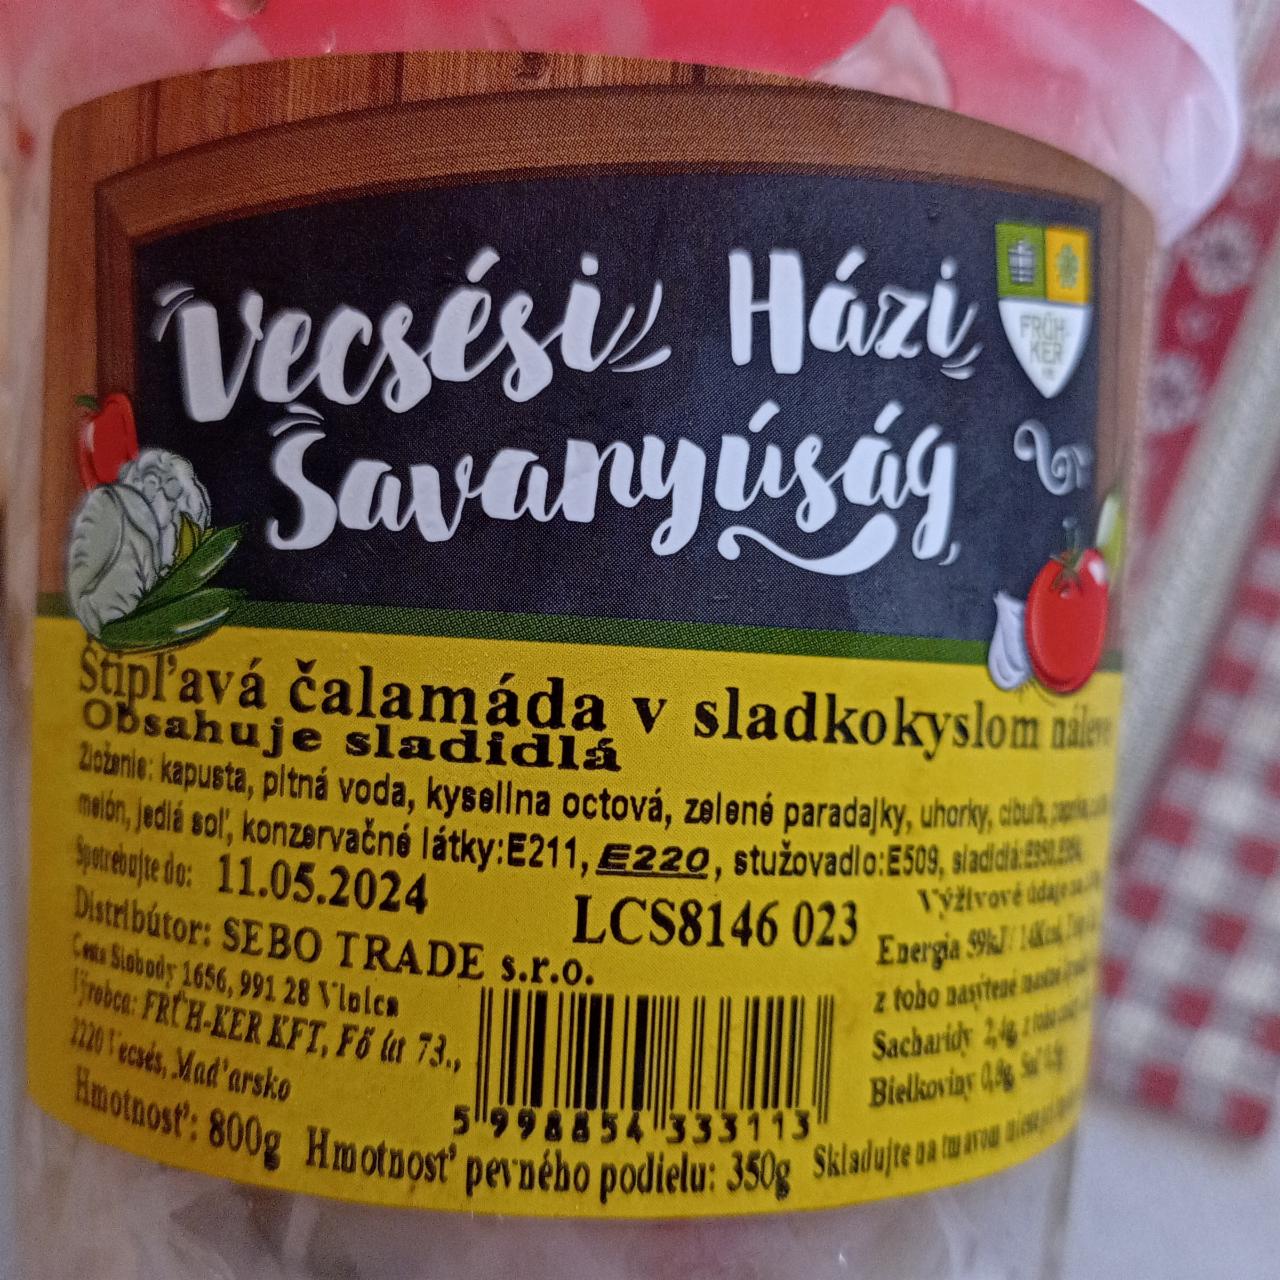 Fotografie - Vecsési Házi Savanyúság Štipľavá čalamáda v sladkokyslom náleve